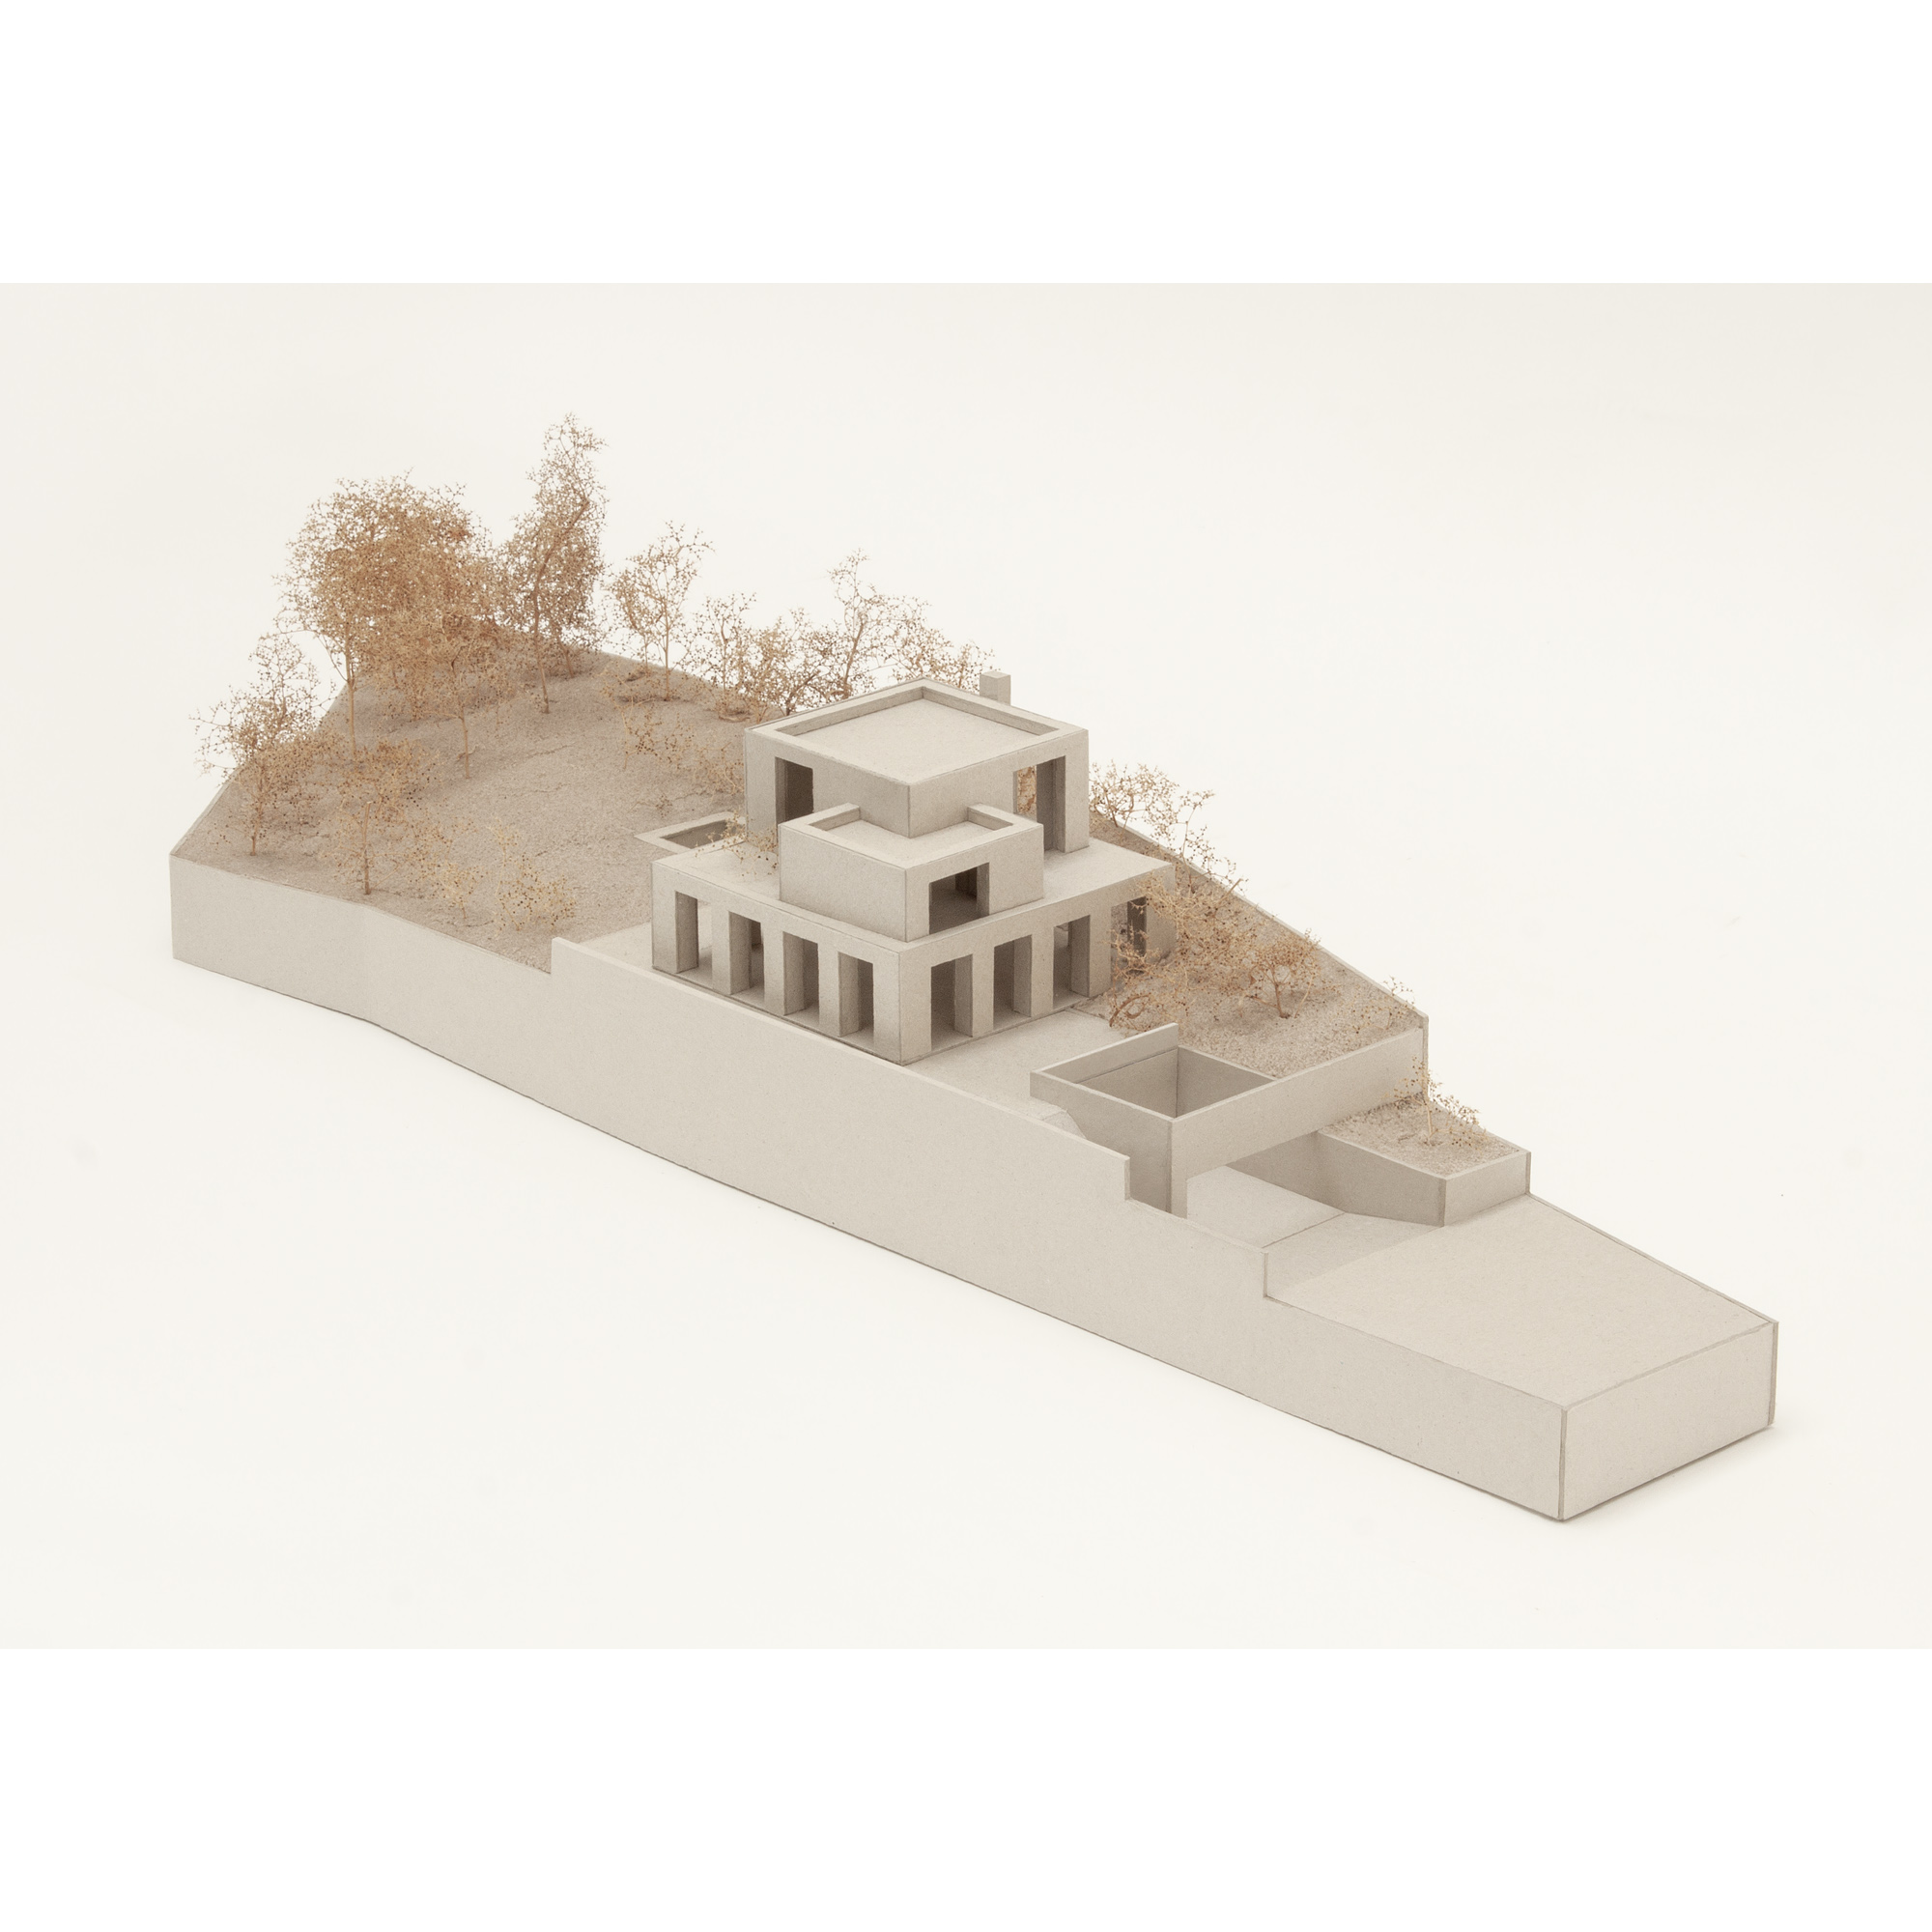 Erbar Mattes Architects West Sussex House Horsham model